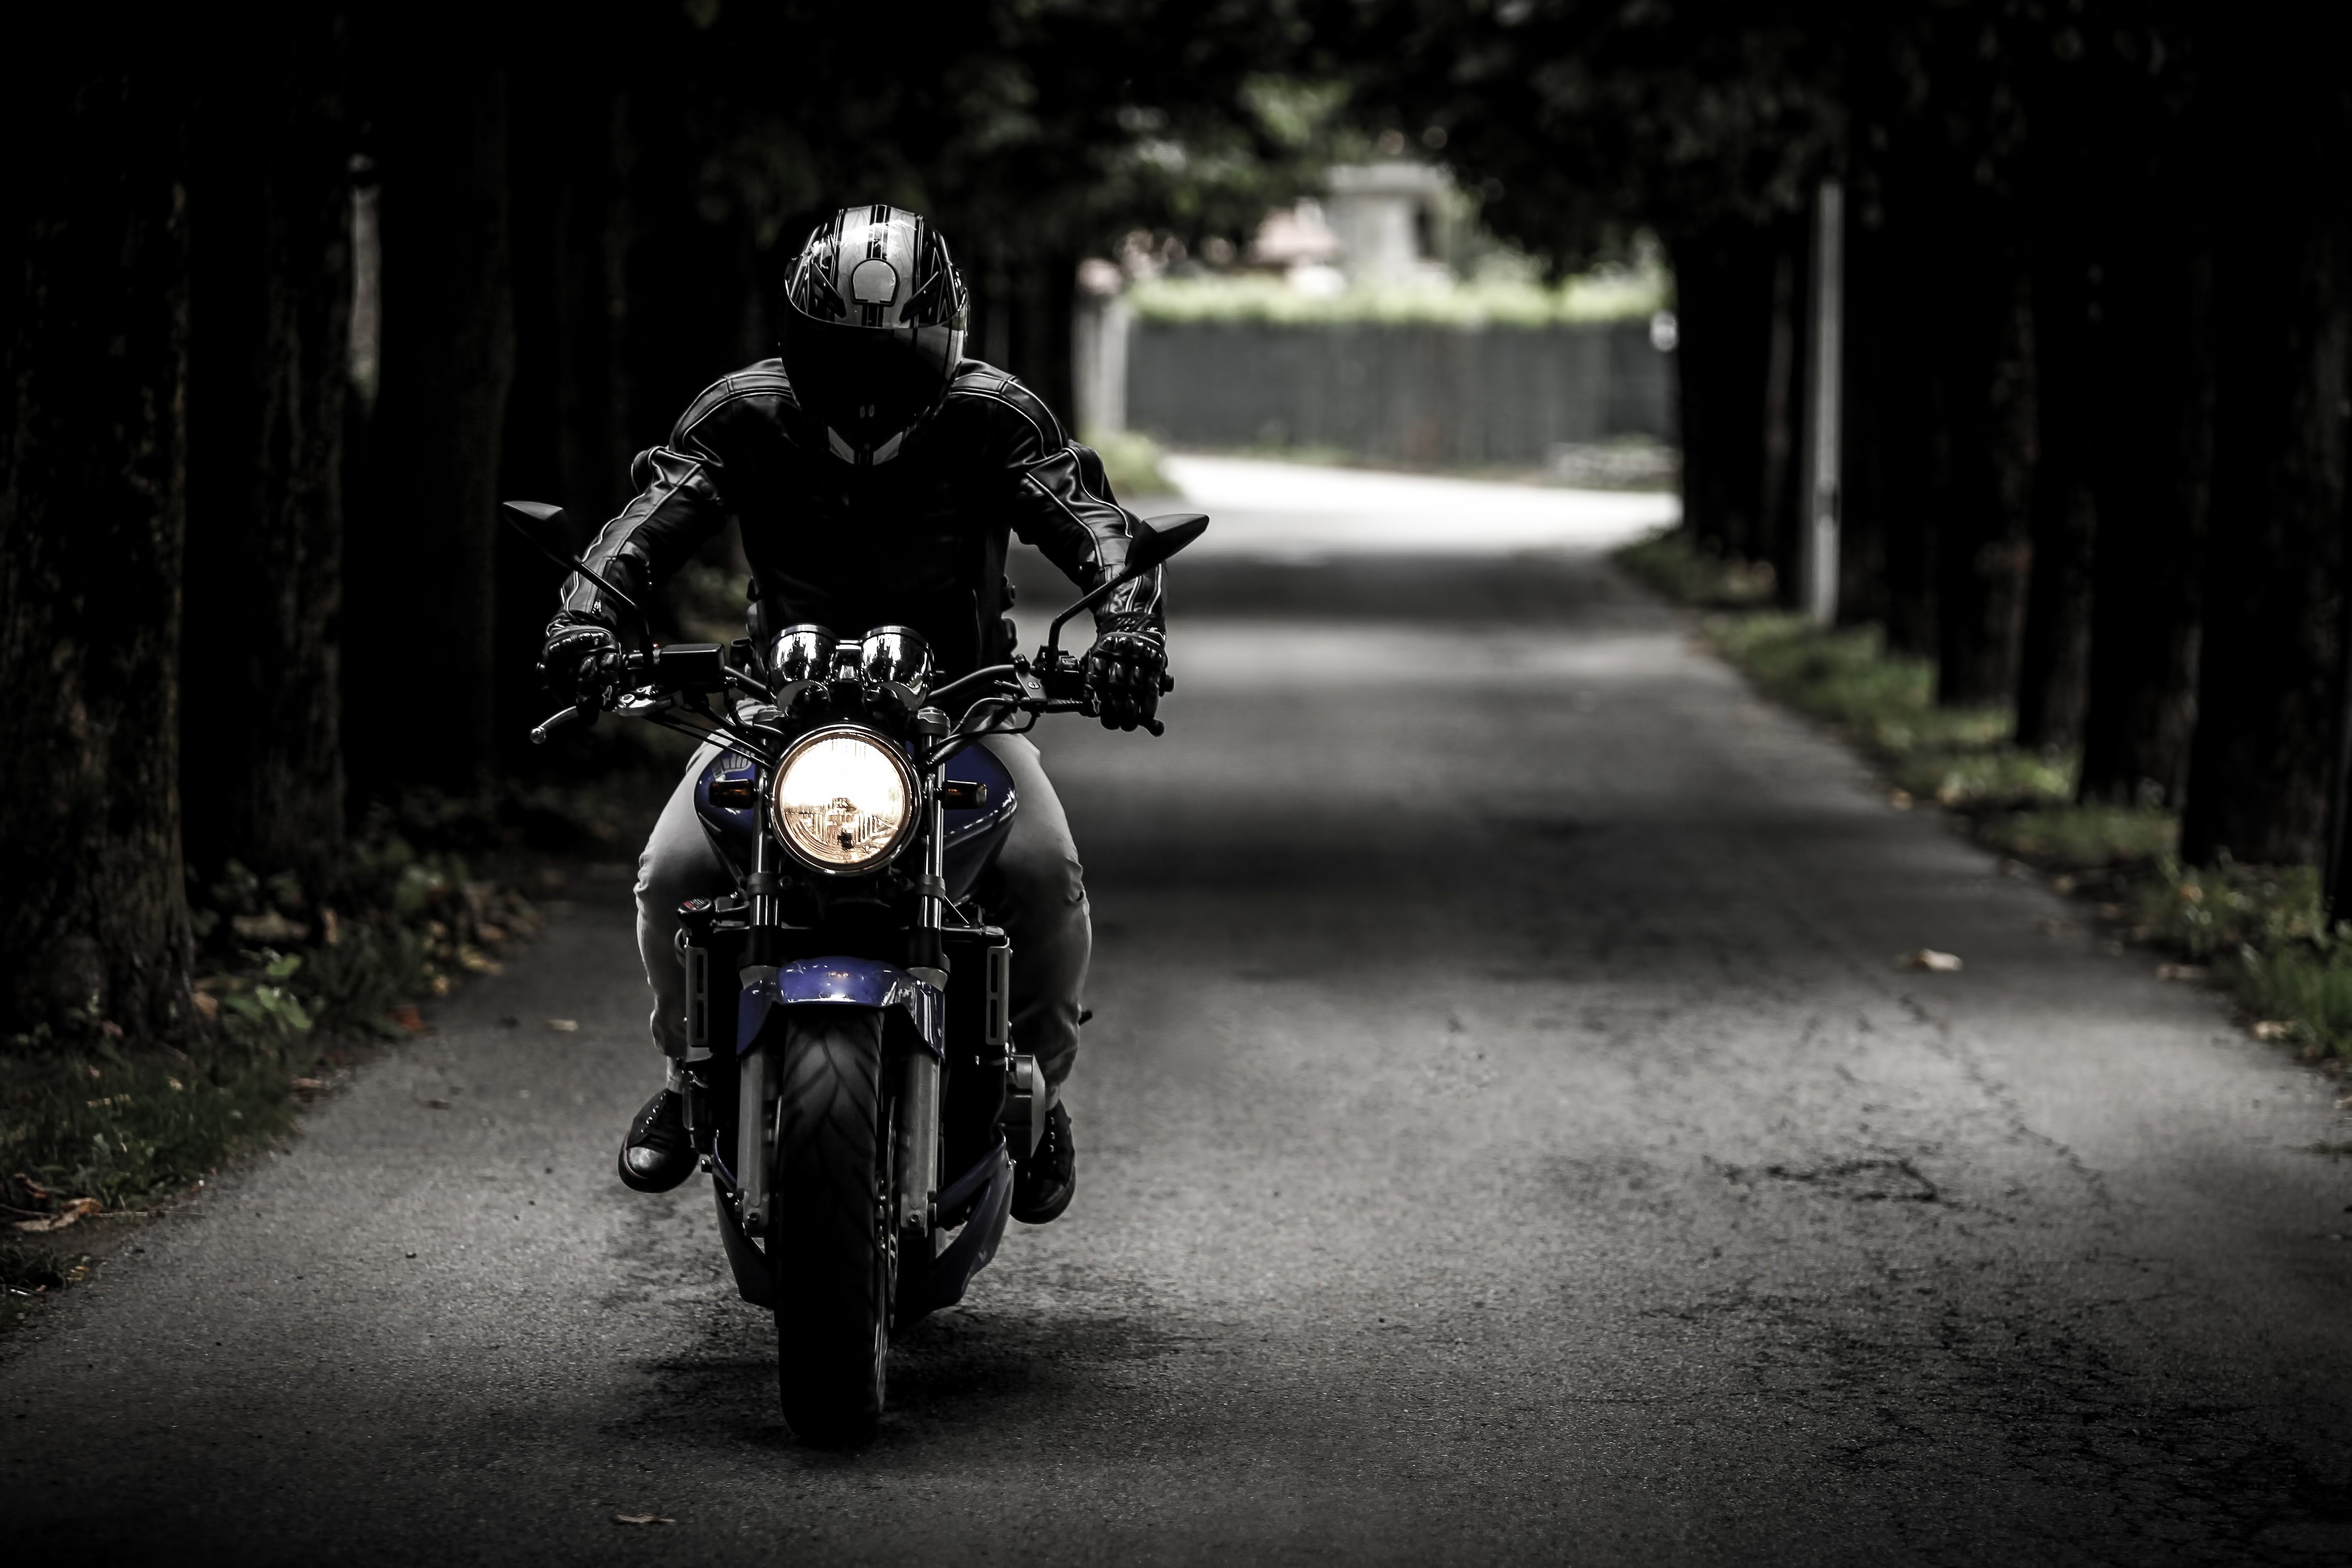 motorcyclist, biker, helmet, motorcycles, traffic, movement, motorcycle